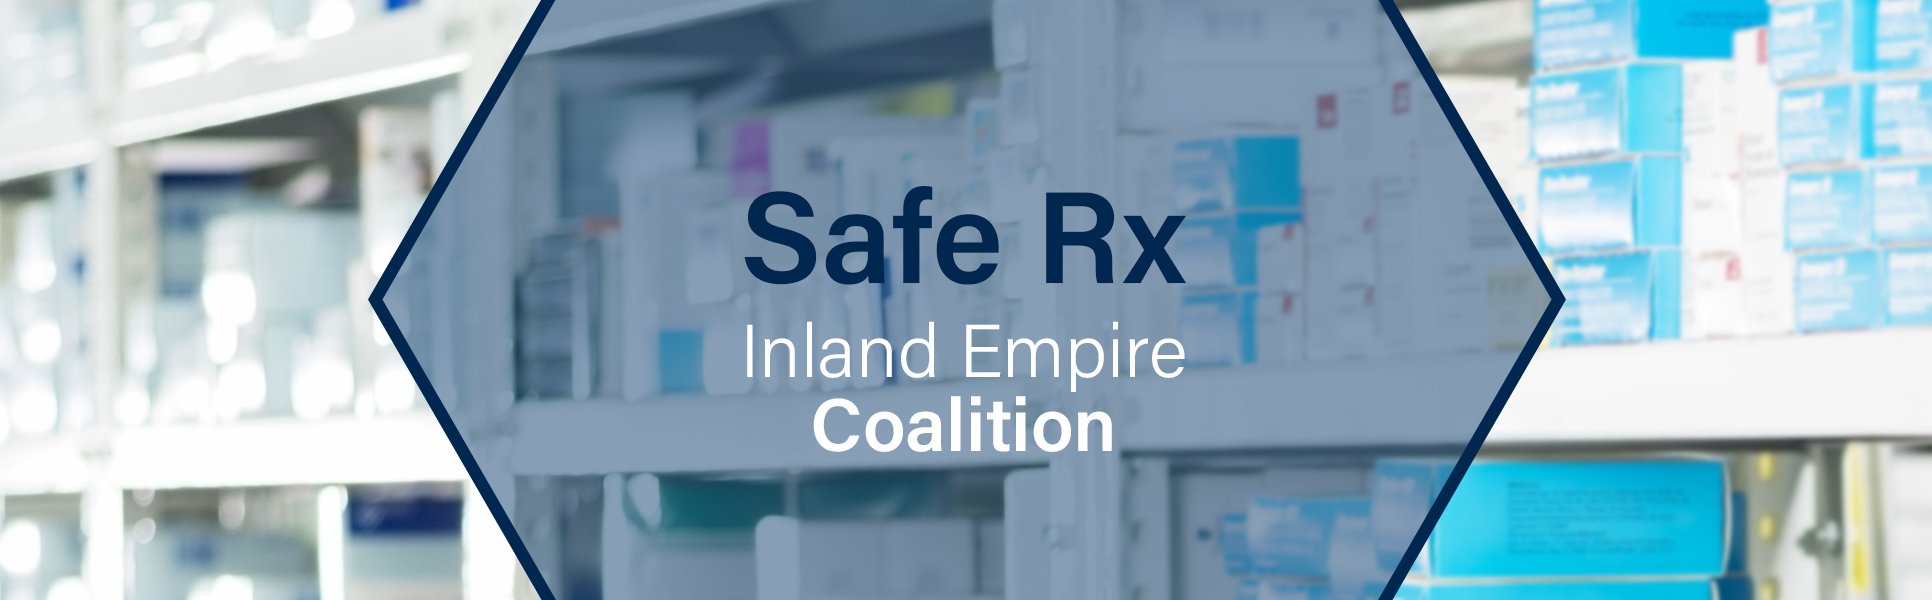 Safe Rx Inland Empire Coalition | DOHC